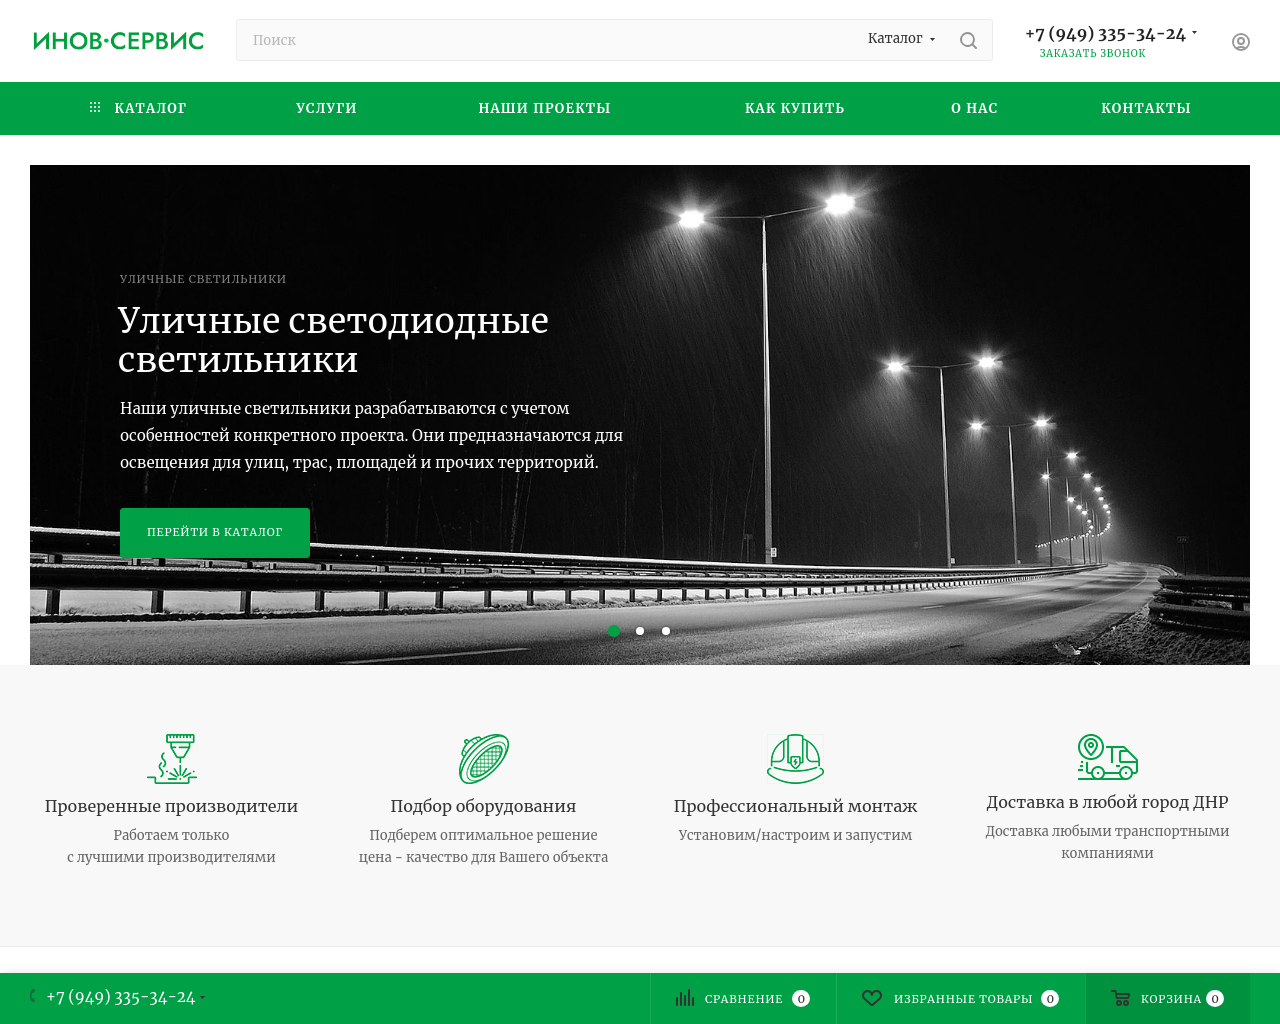 inov-service.ru